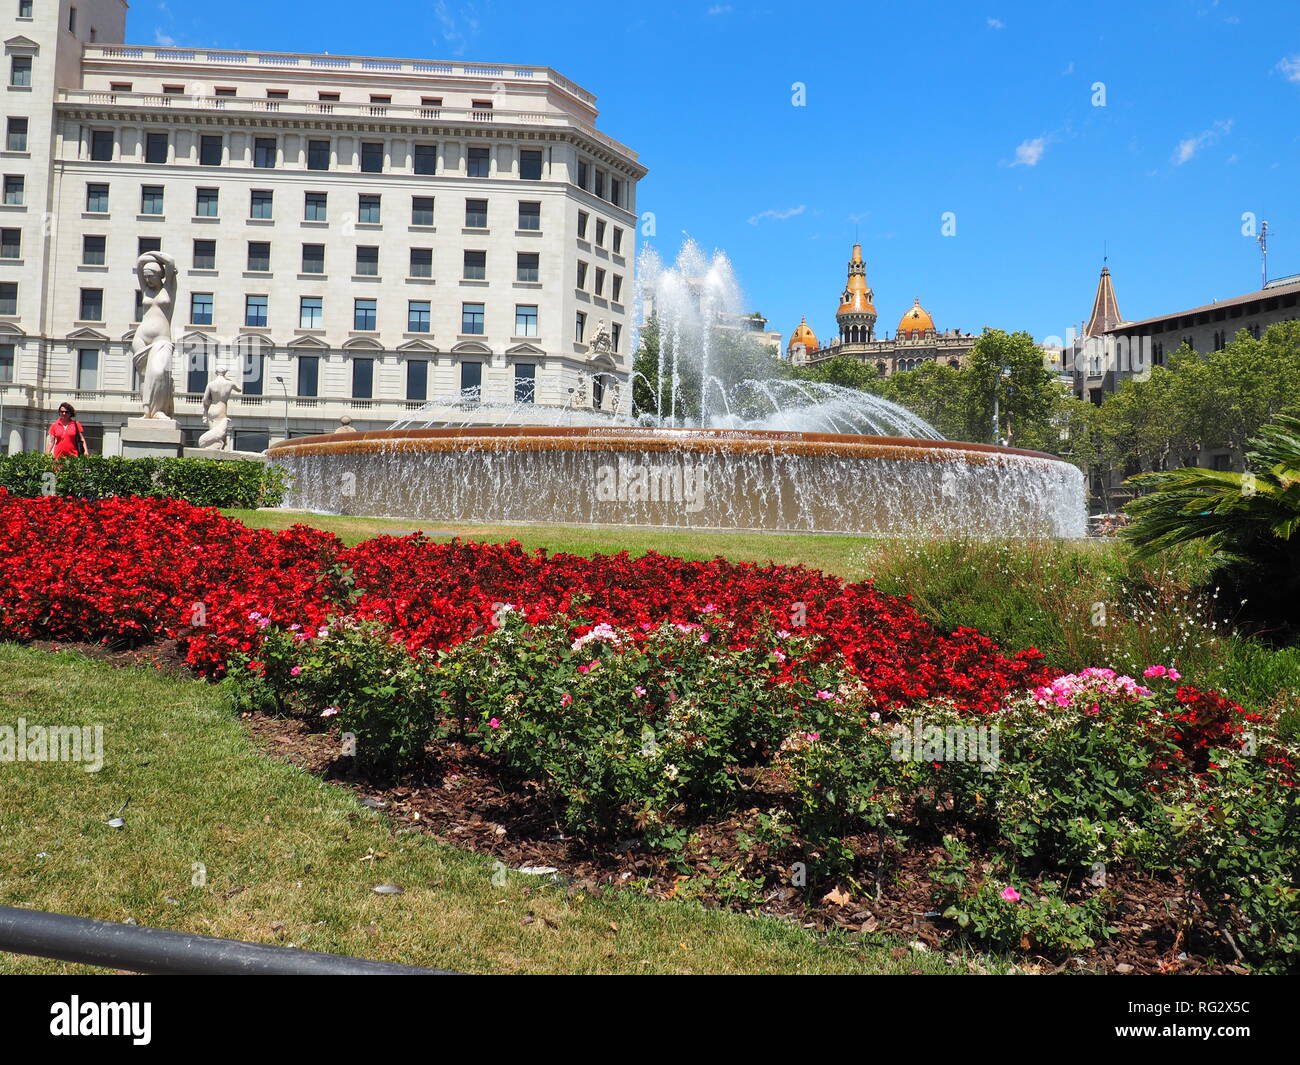 Flowers and Fountain in Plaza Catalunya - Barcelona - Spain Stock Photo